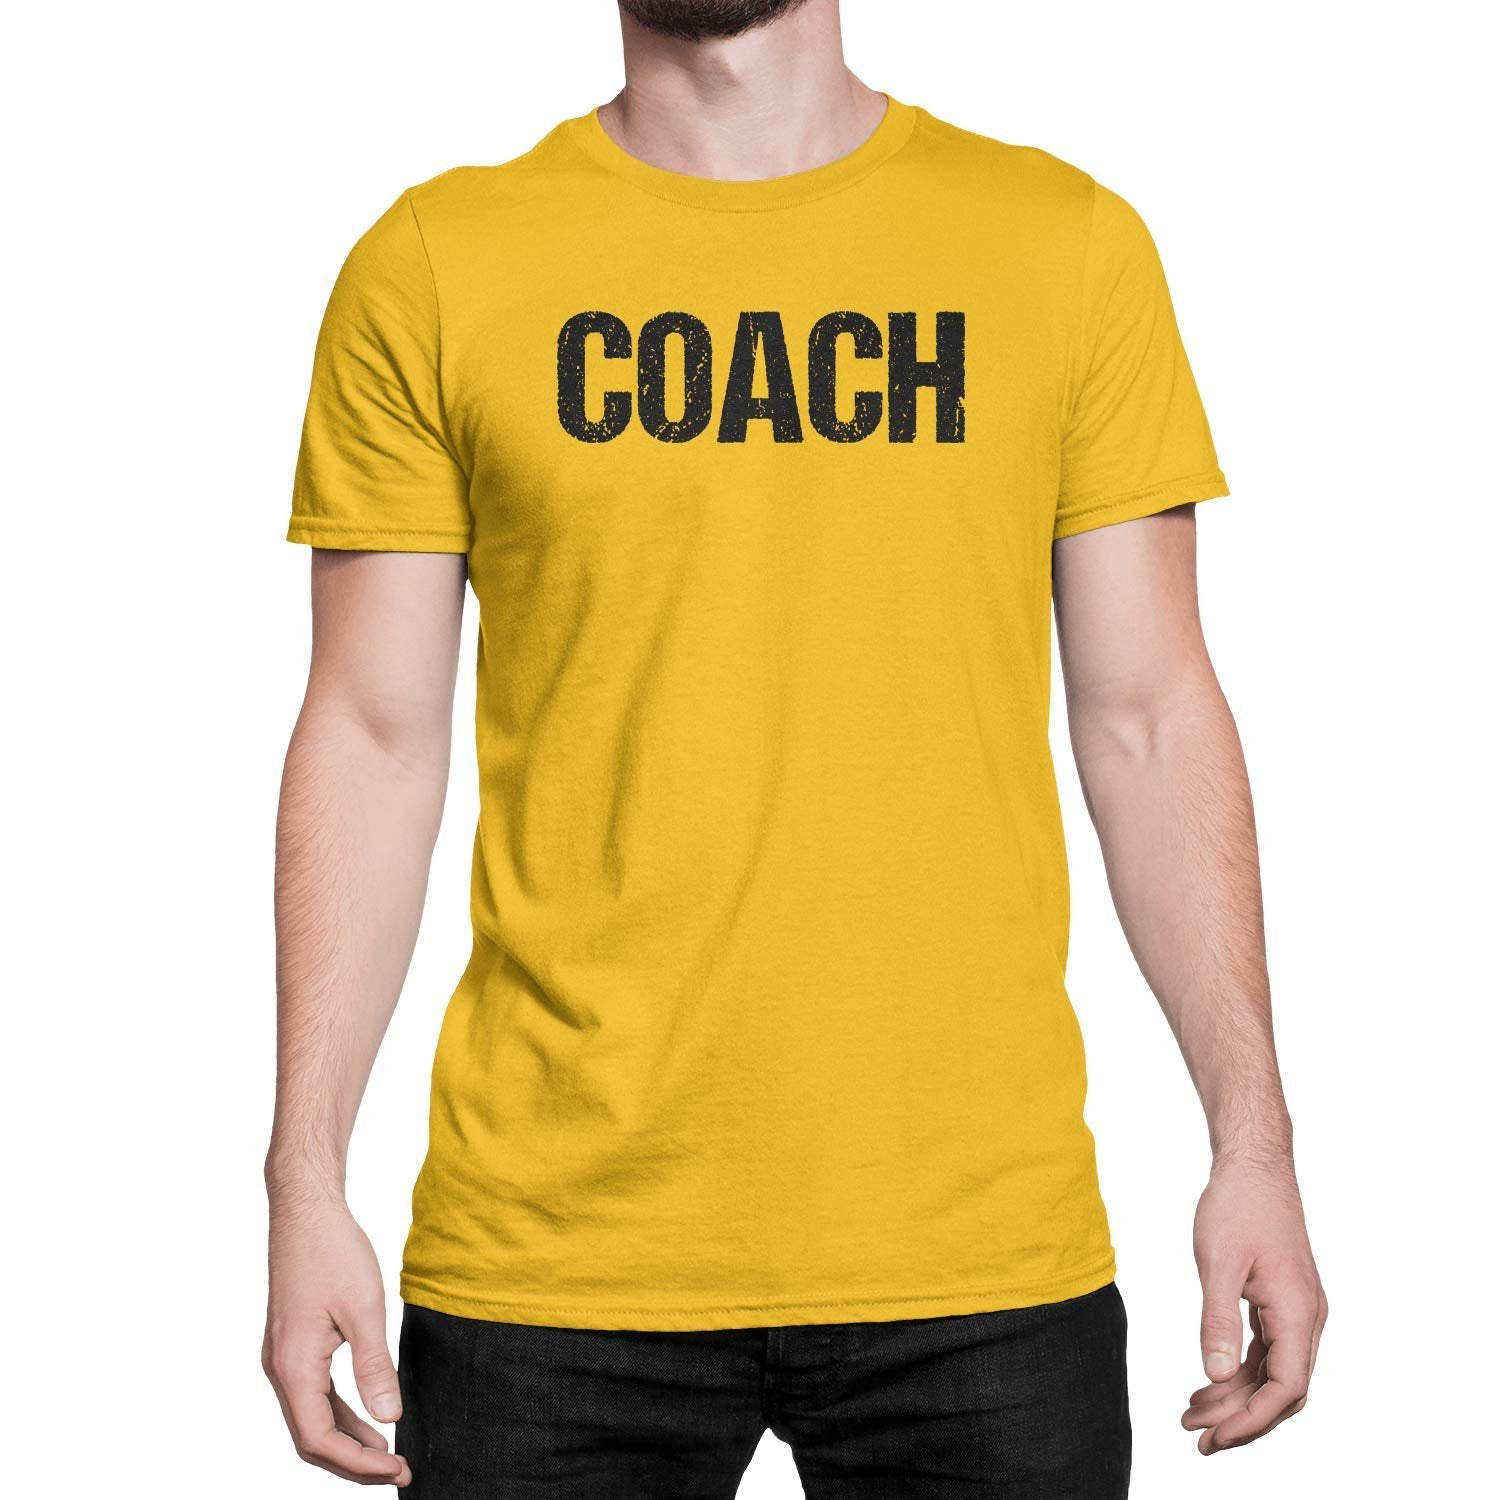 Coach T-Shirt Sports Coaching Tee Shirt (Gold  & Black, Distressed)